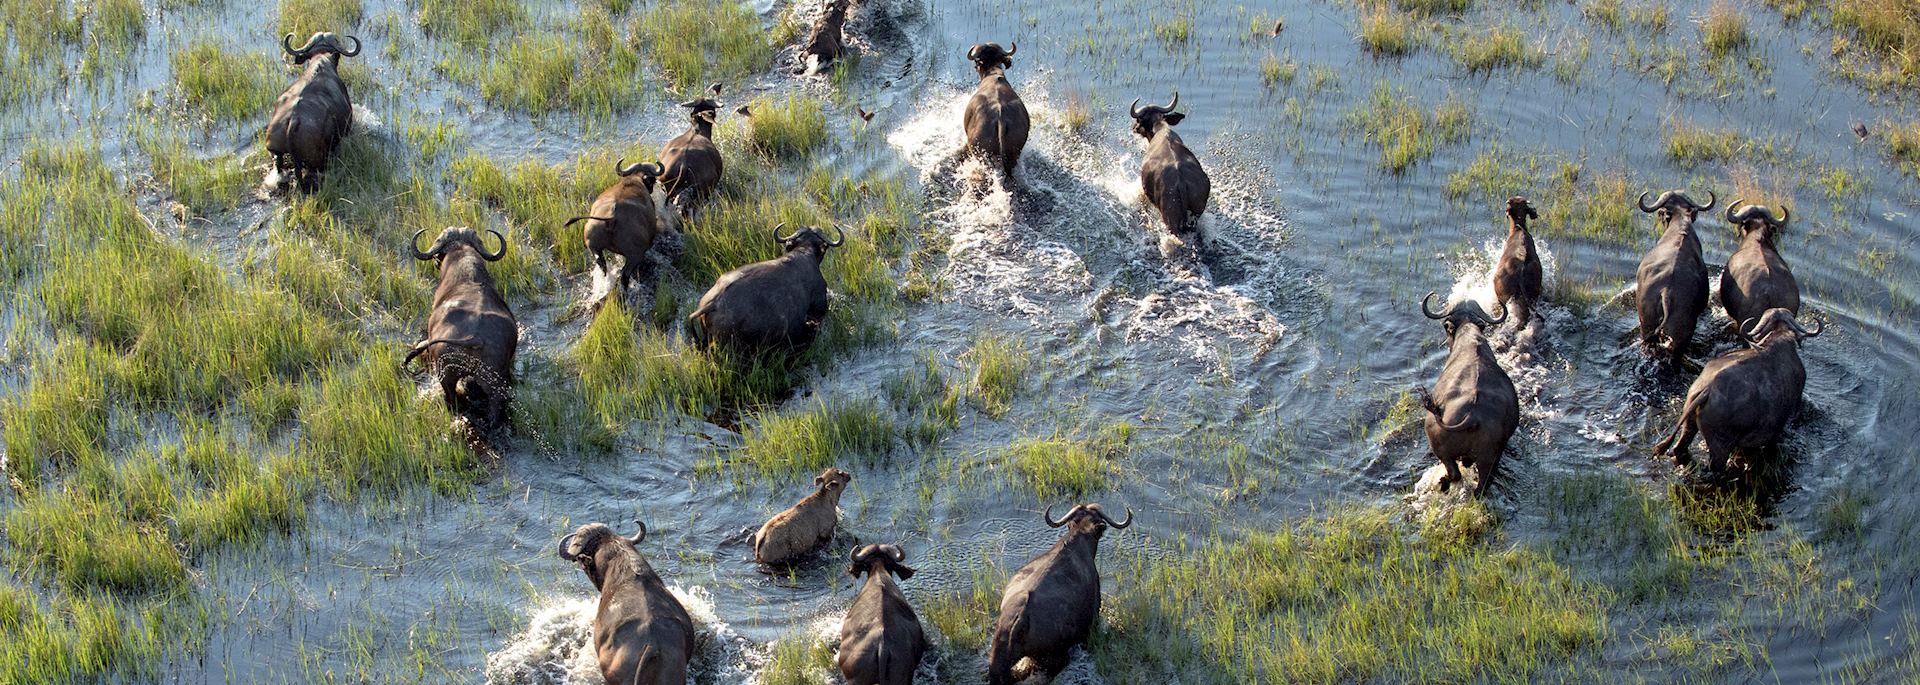 Buffalo in the Okavango Delta